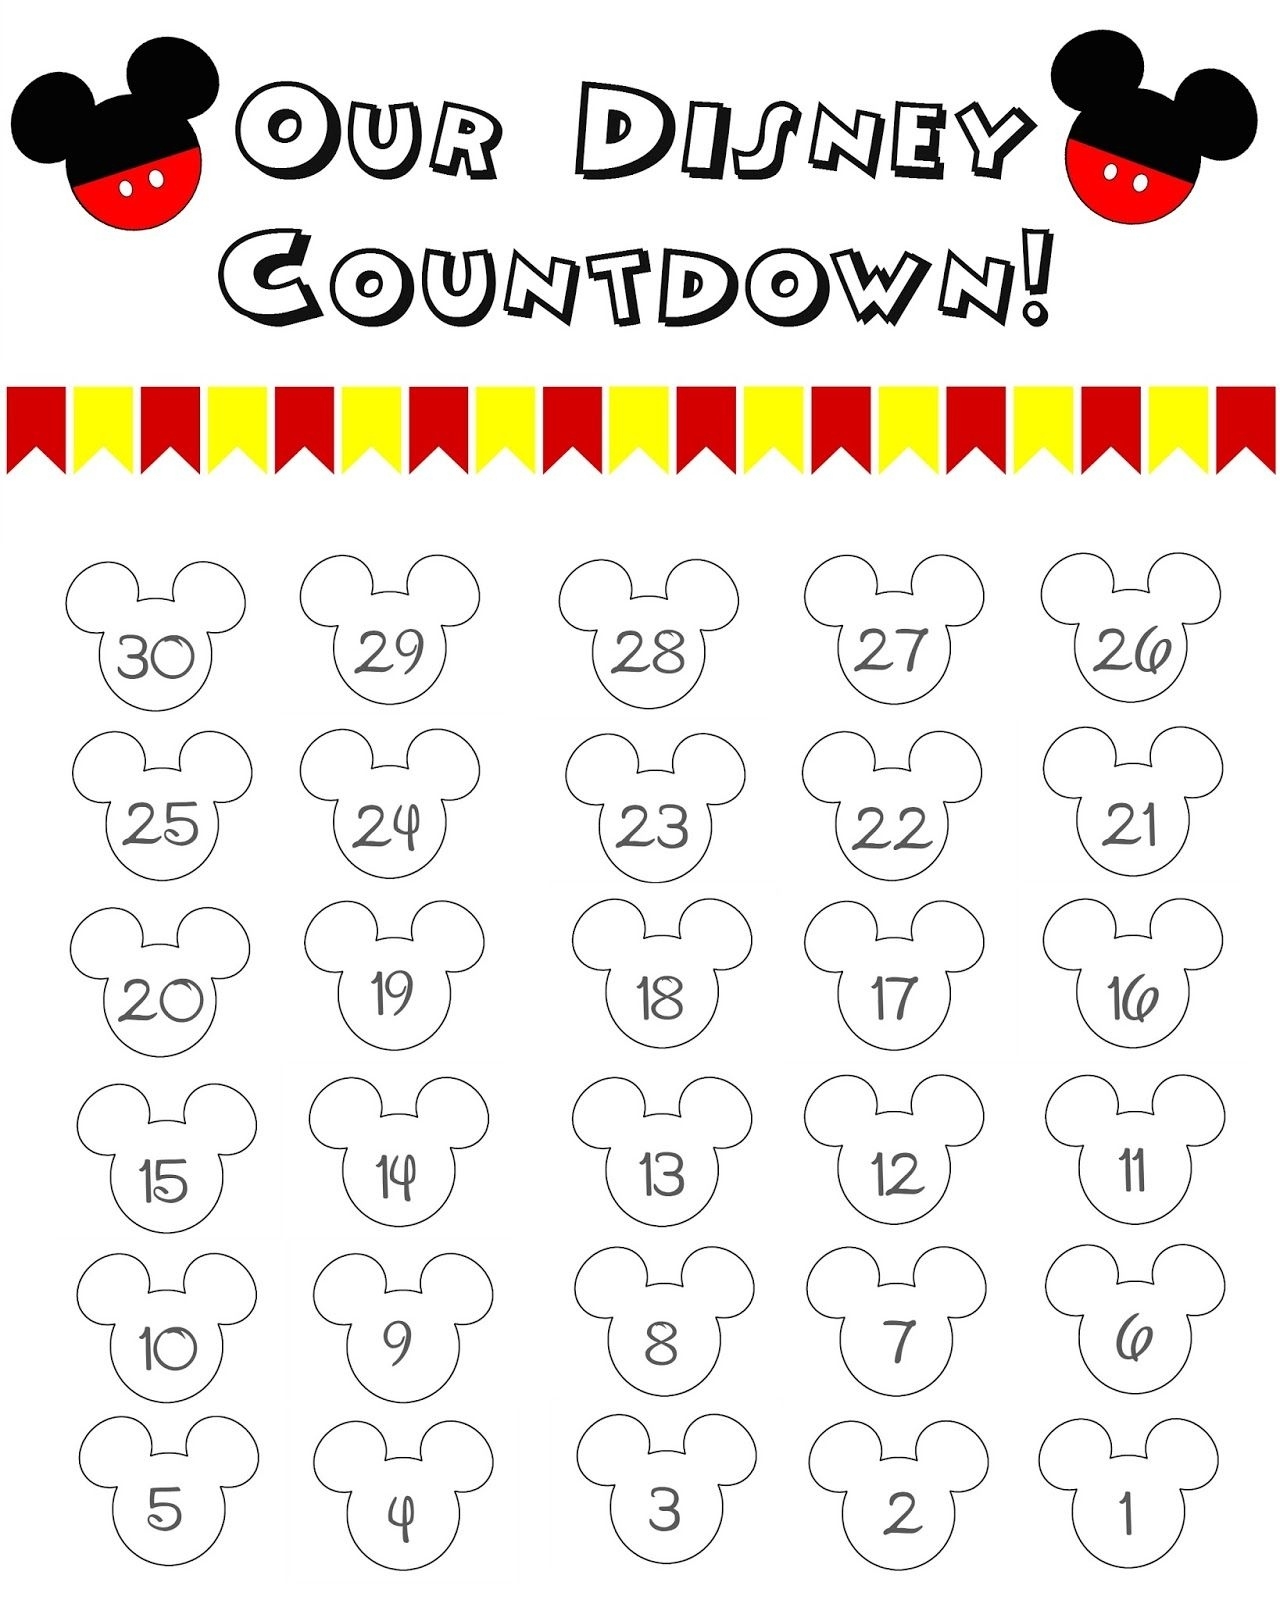 Disney World Countdown Calendar - Free Printable | Disney Extraordinary Count Diwn To Disneyland Trip